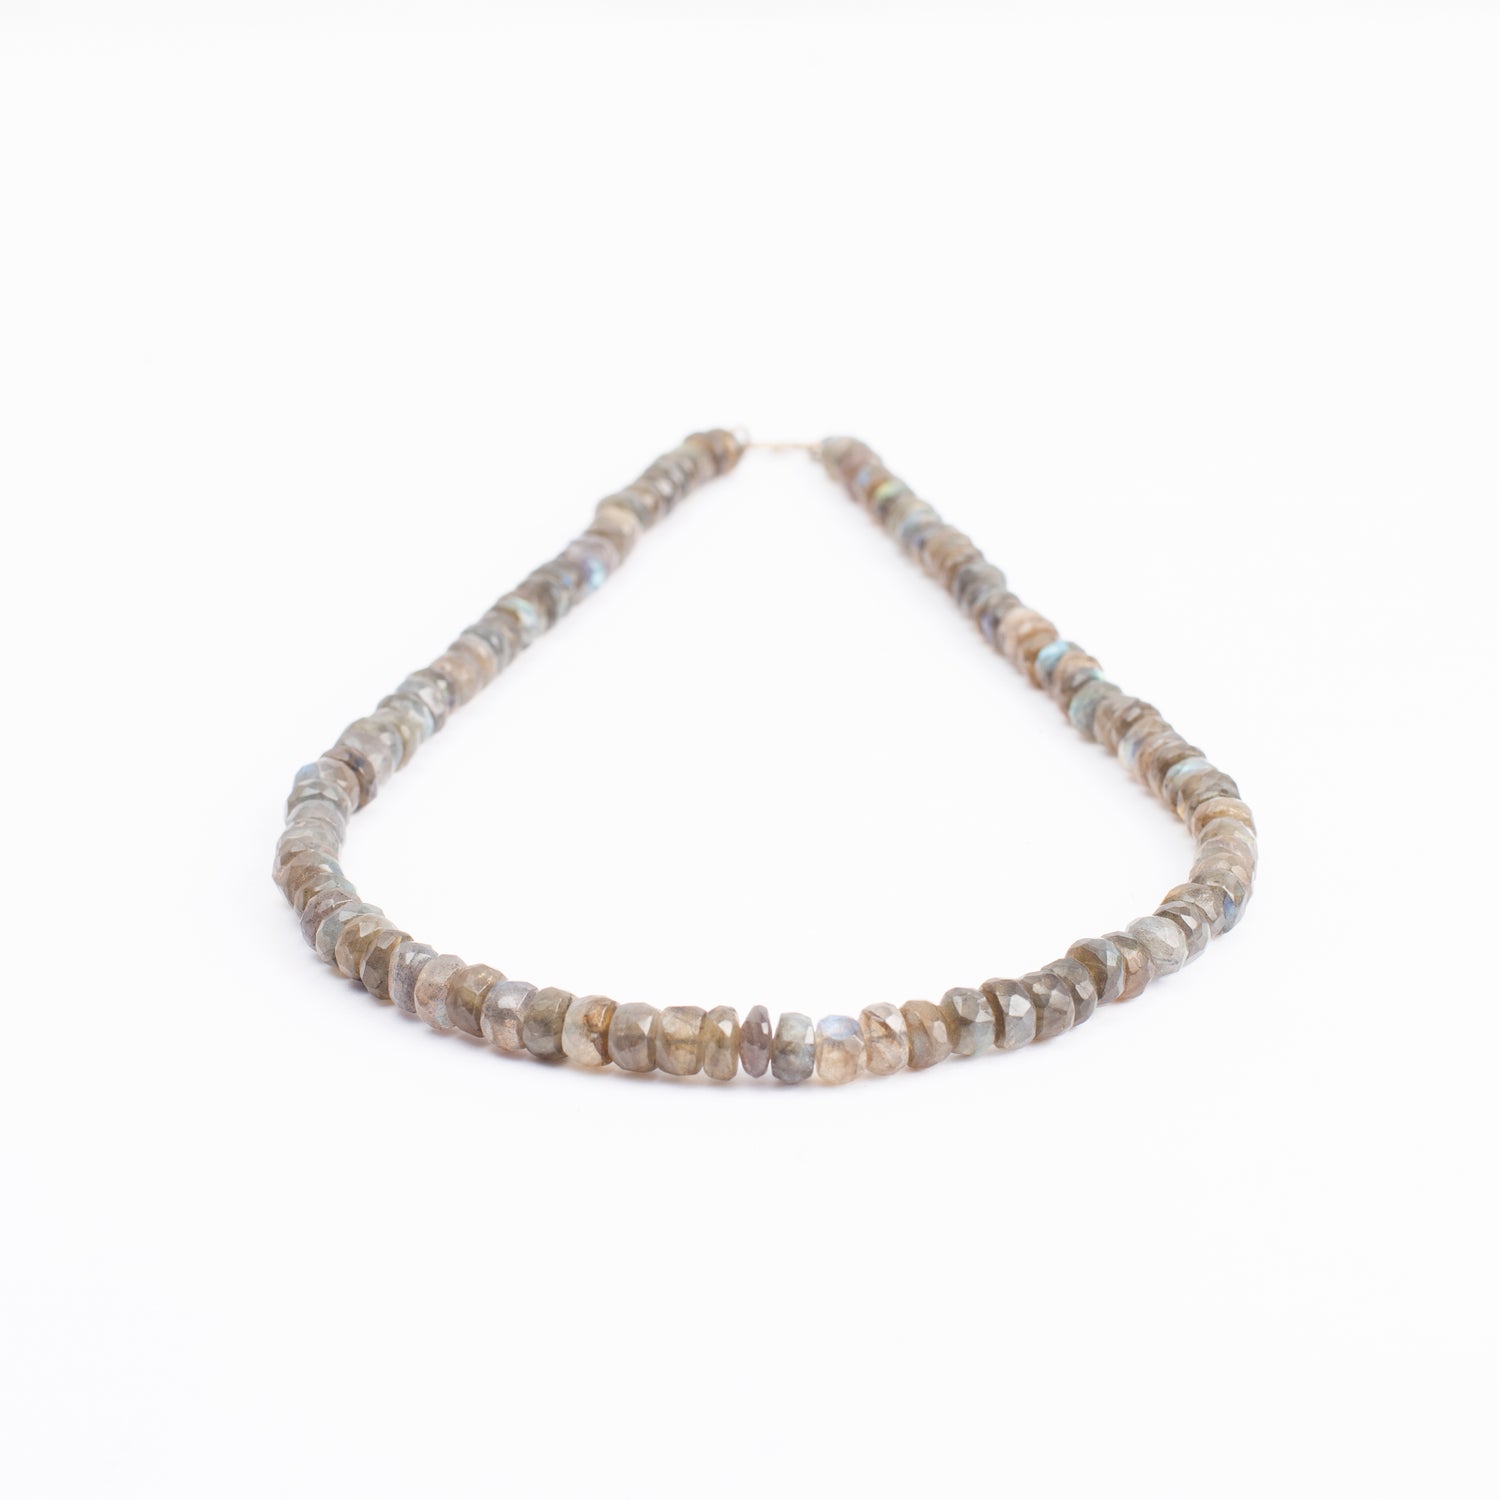 Labradorite Dark Shade Oval Cut Beads Necklace